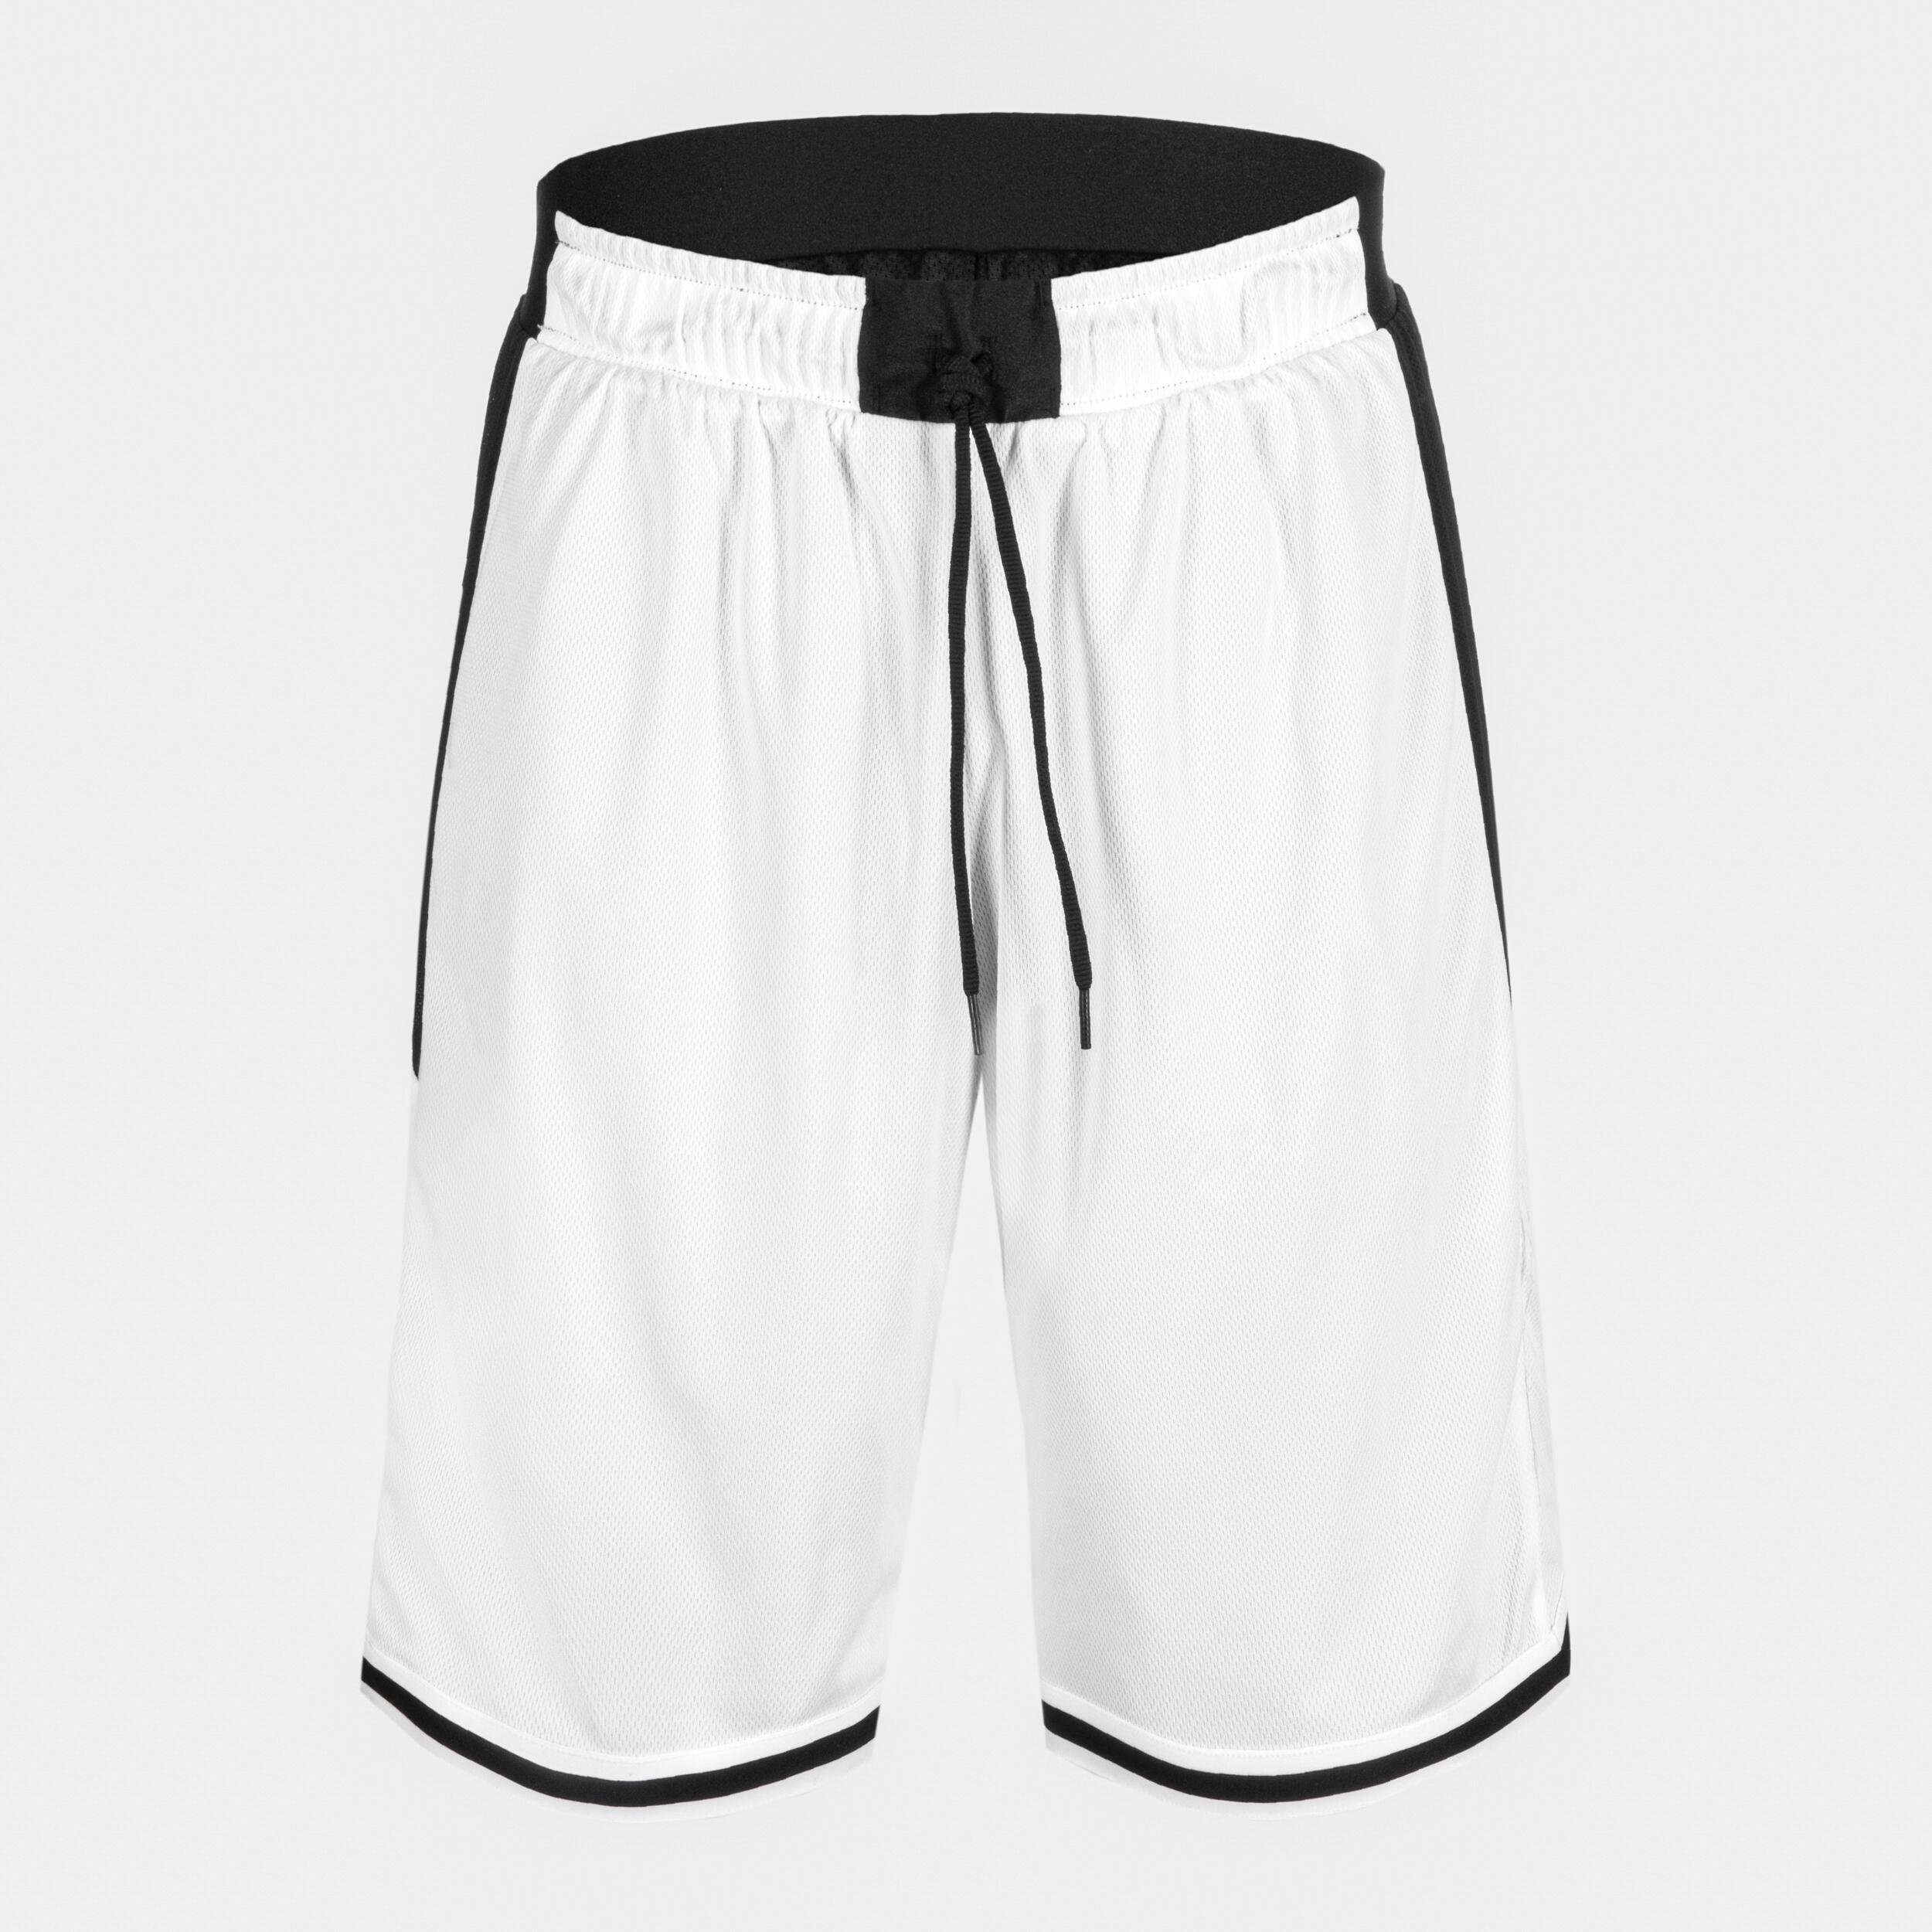 Adult 2-Way Basketball Shorts SH500R - Black/White 8/9